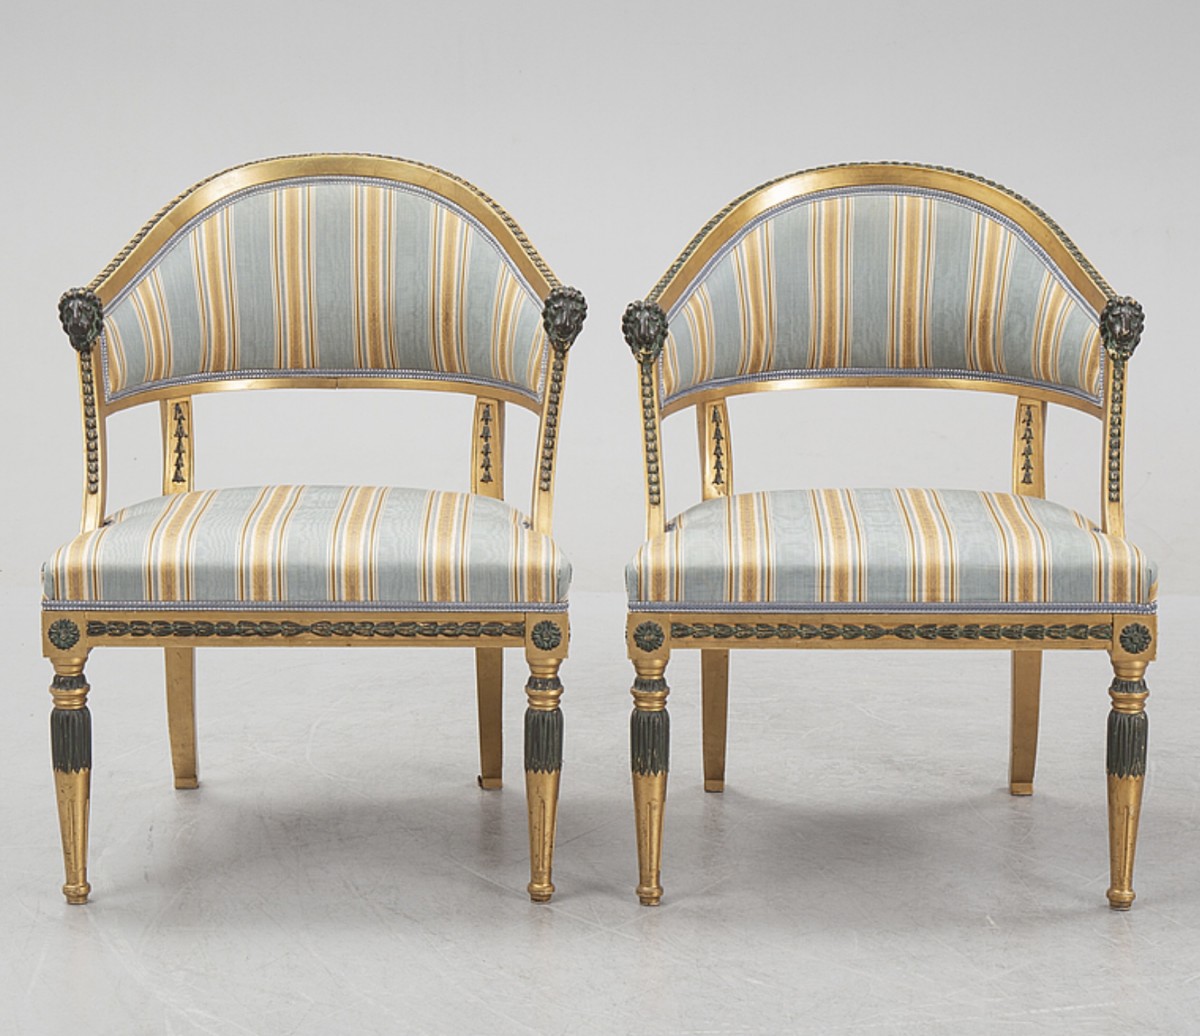 Pair of Circa 1900 Louis XV Style Beech Fauteuil Armchairs